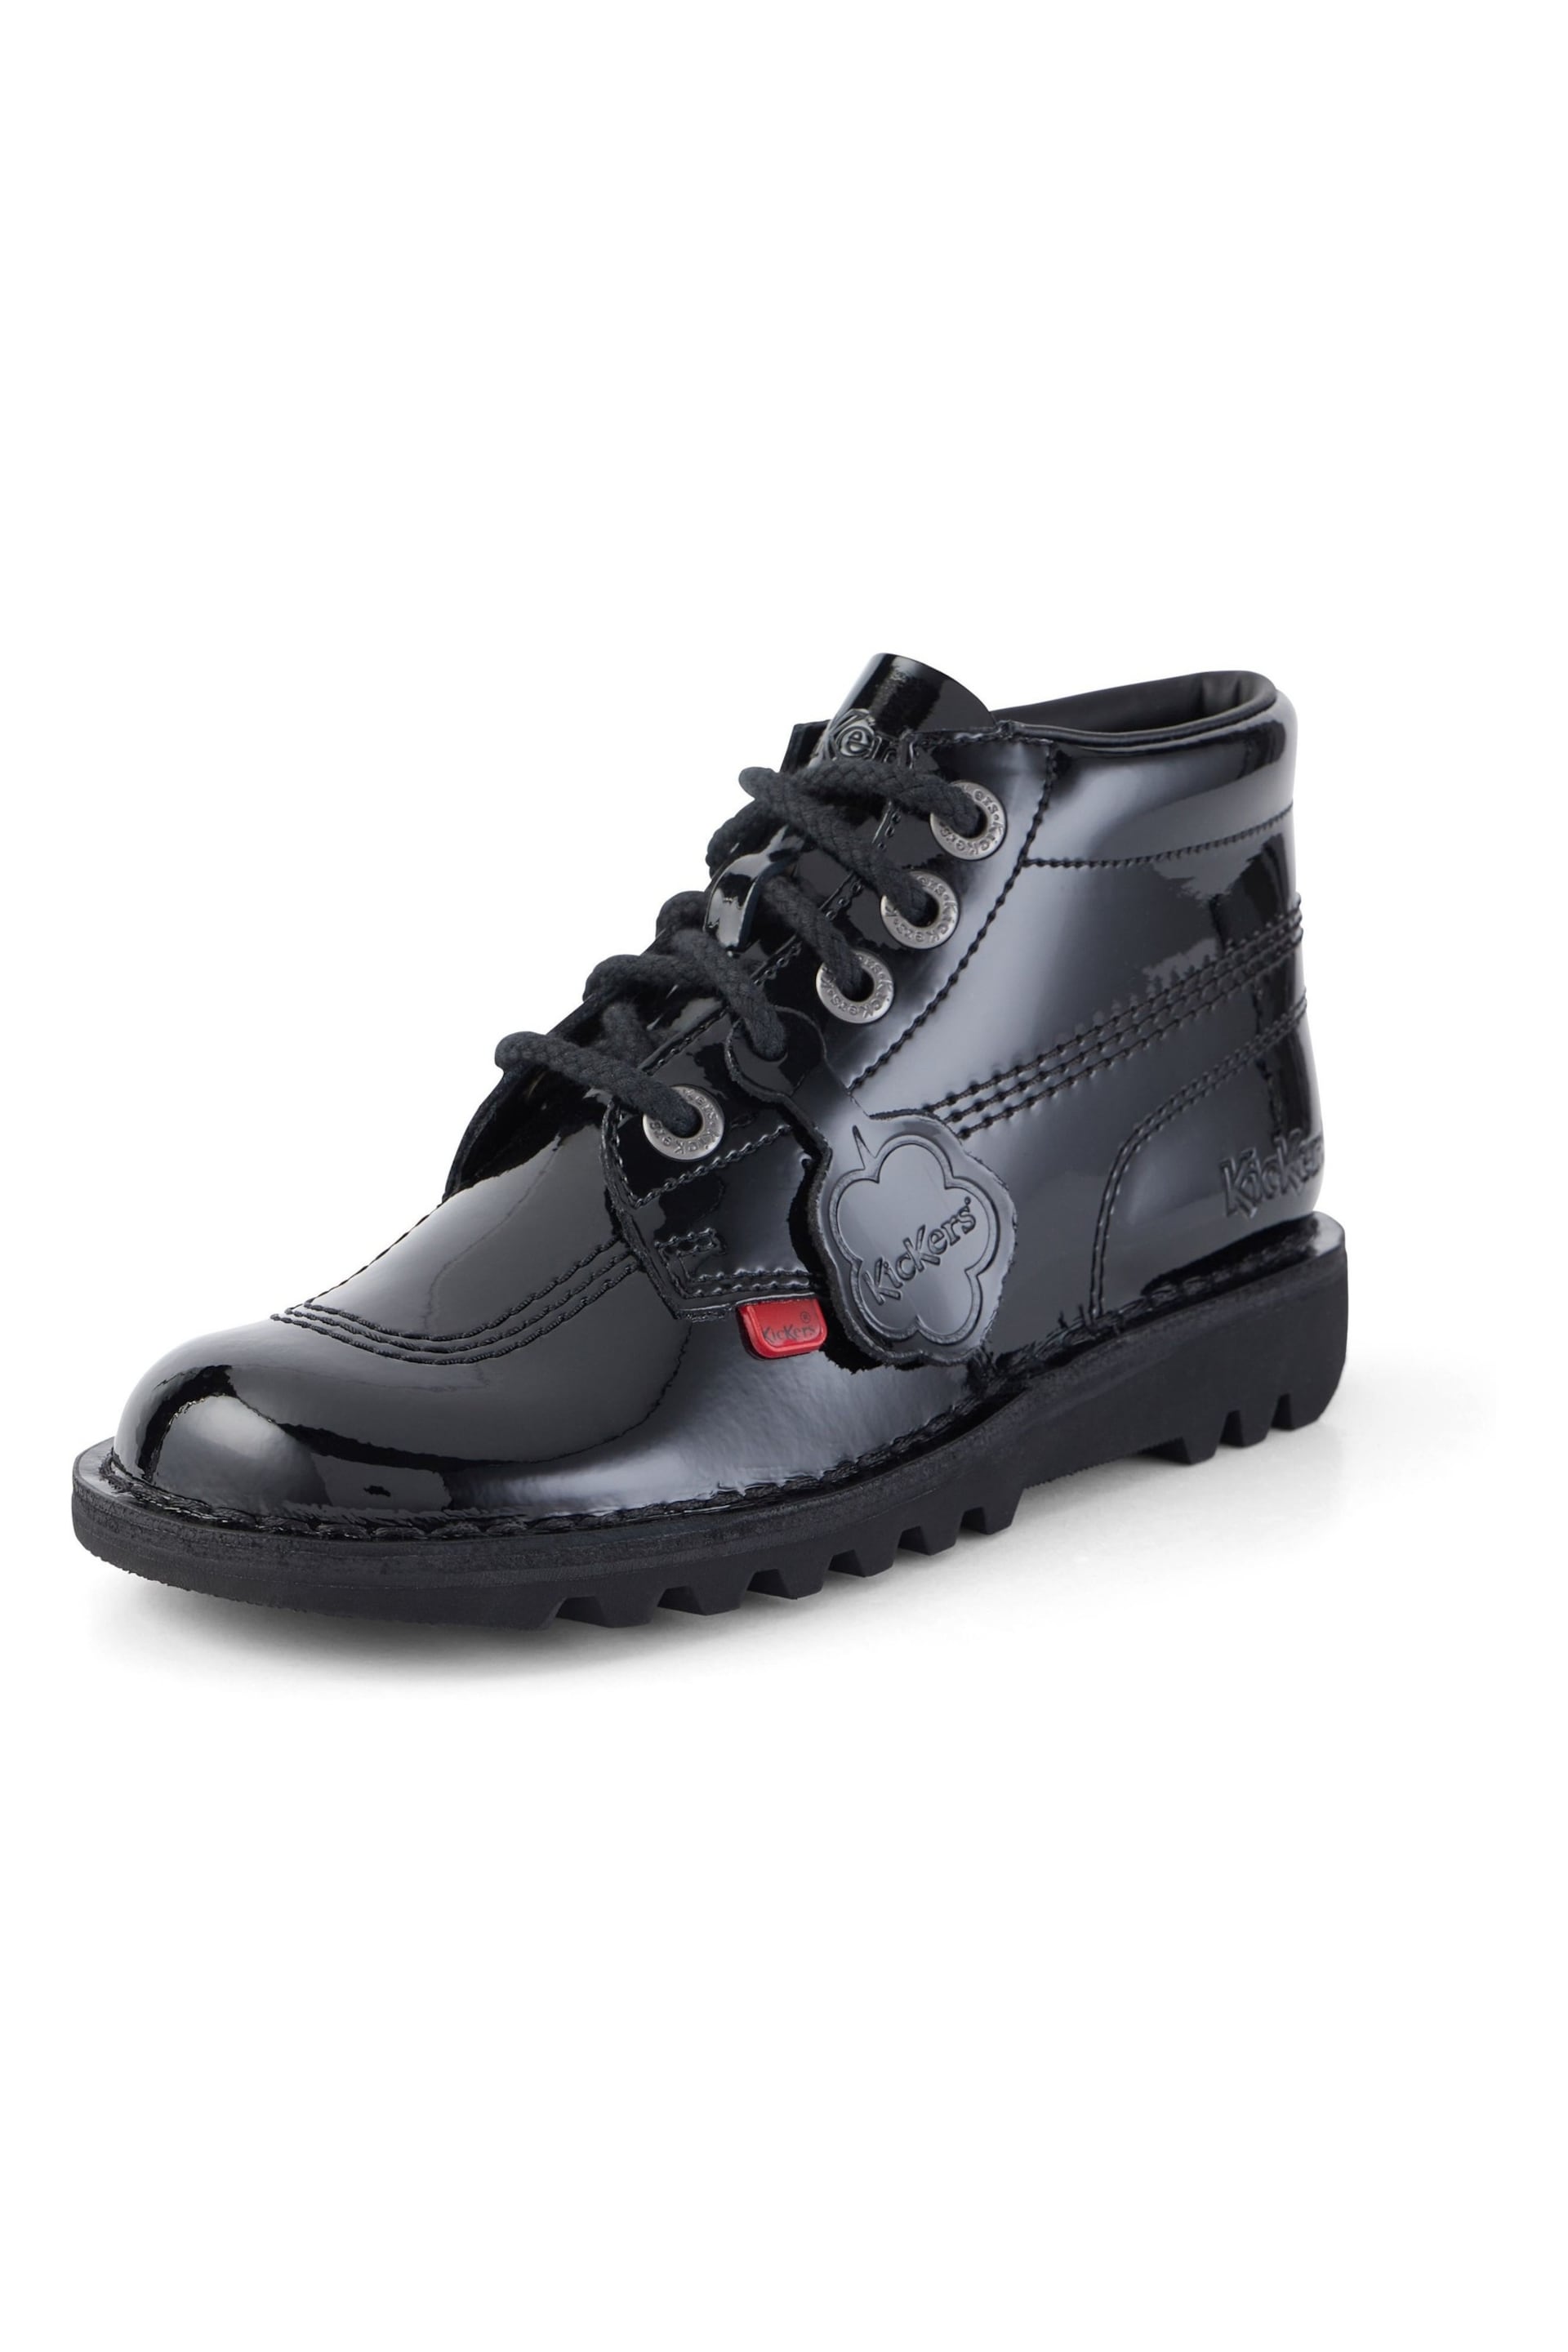 Kickers Womens Black Kick Hi Patent Leather Shoes - Image 3 of 7